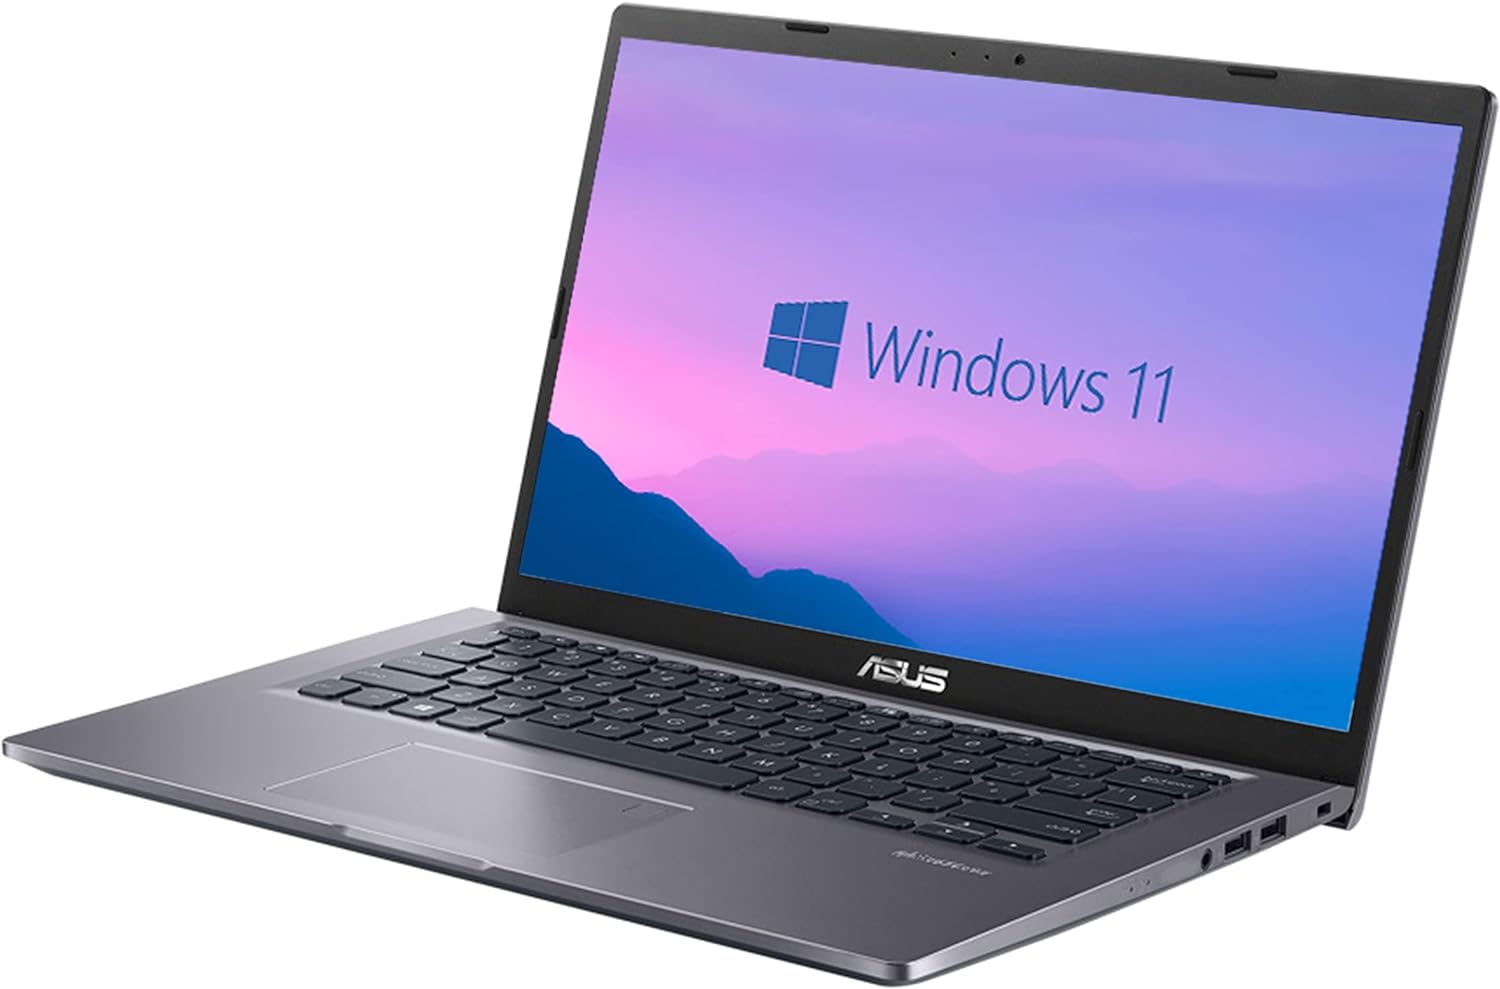 ASUS VivoBook 14 FHD 1080p Laptop, Intel Core i3-1115G4, 8GB RAM, 512GB PCIe SSD, Backlit Keyboard, HDMI, WiFi, Webcam, Windows 11 Home, Slate Grey